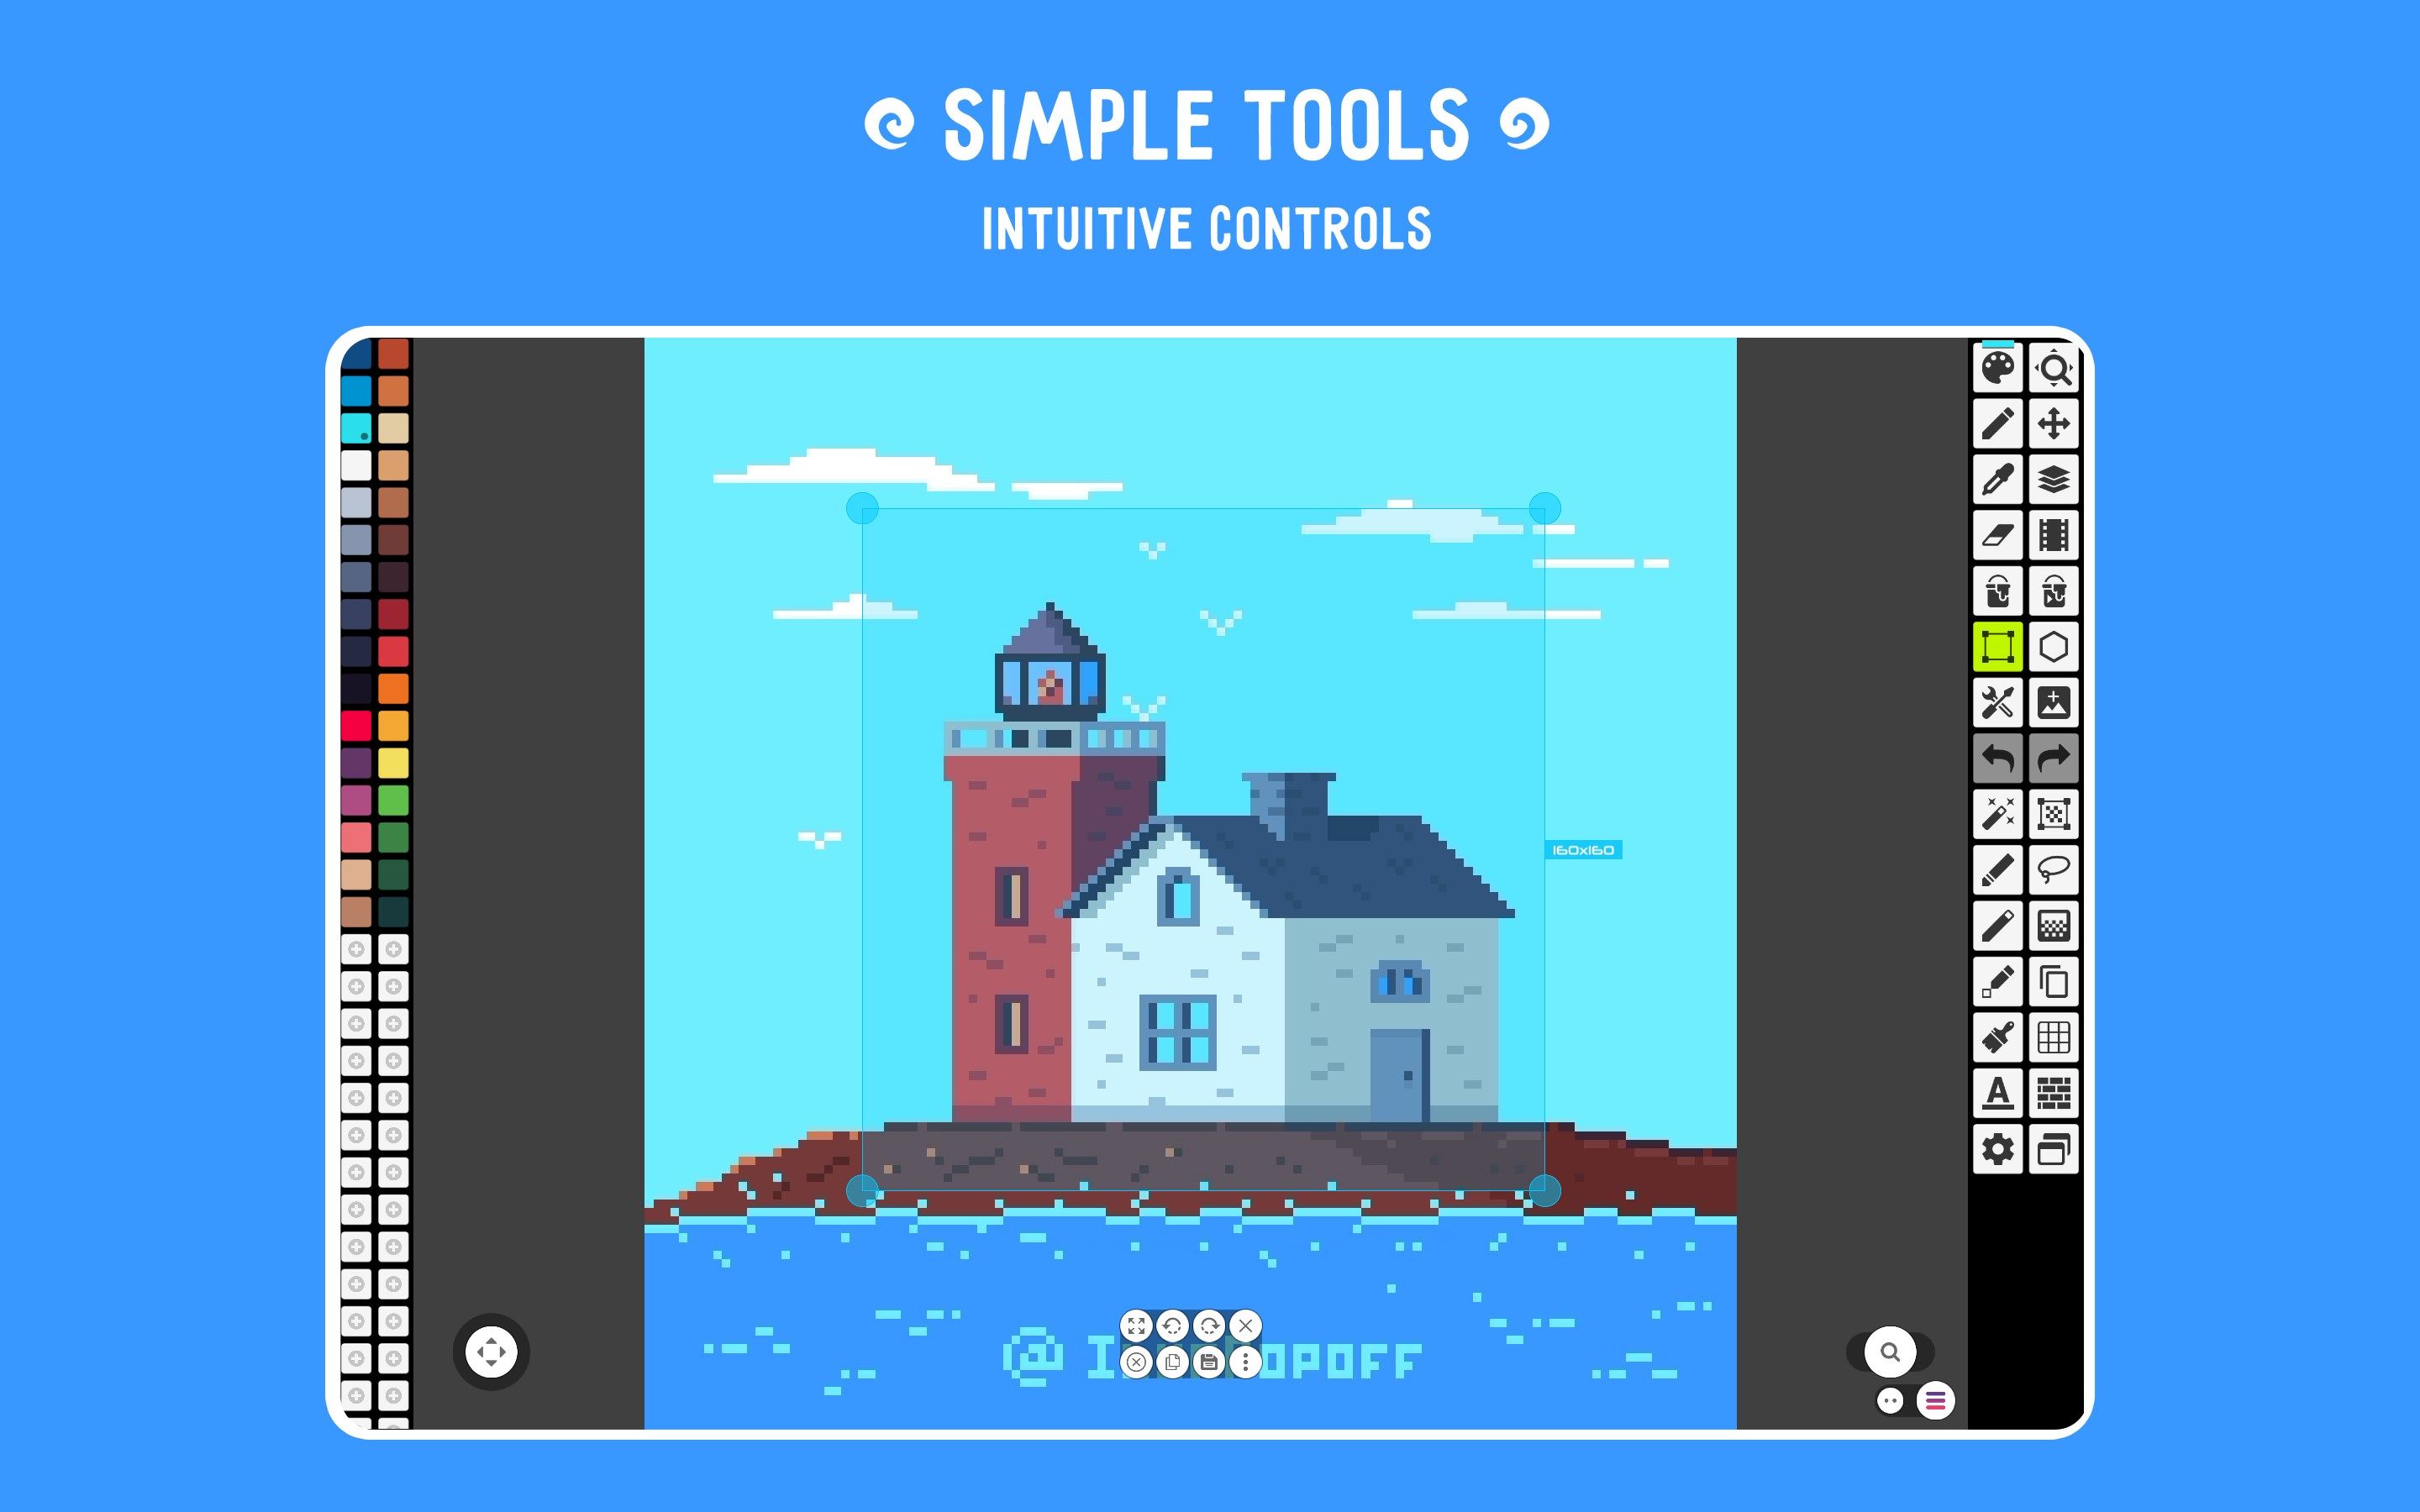 Simple tools, intuitive controls